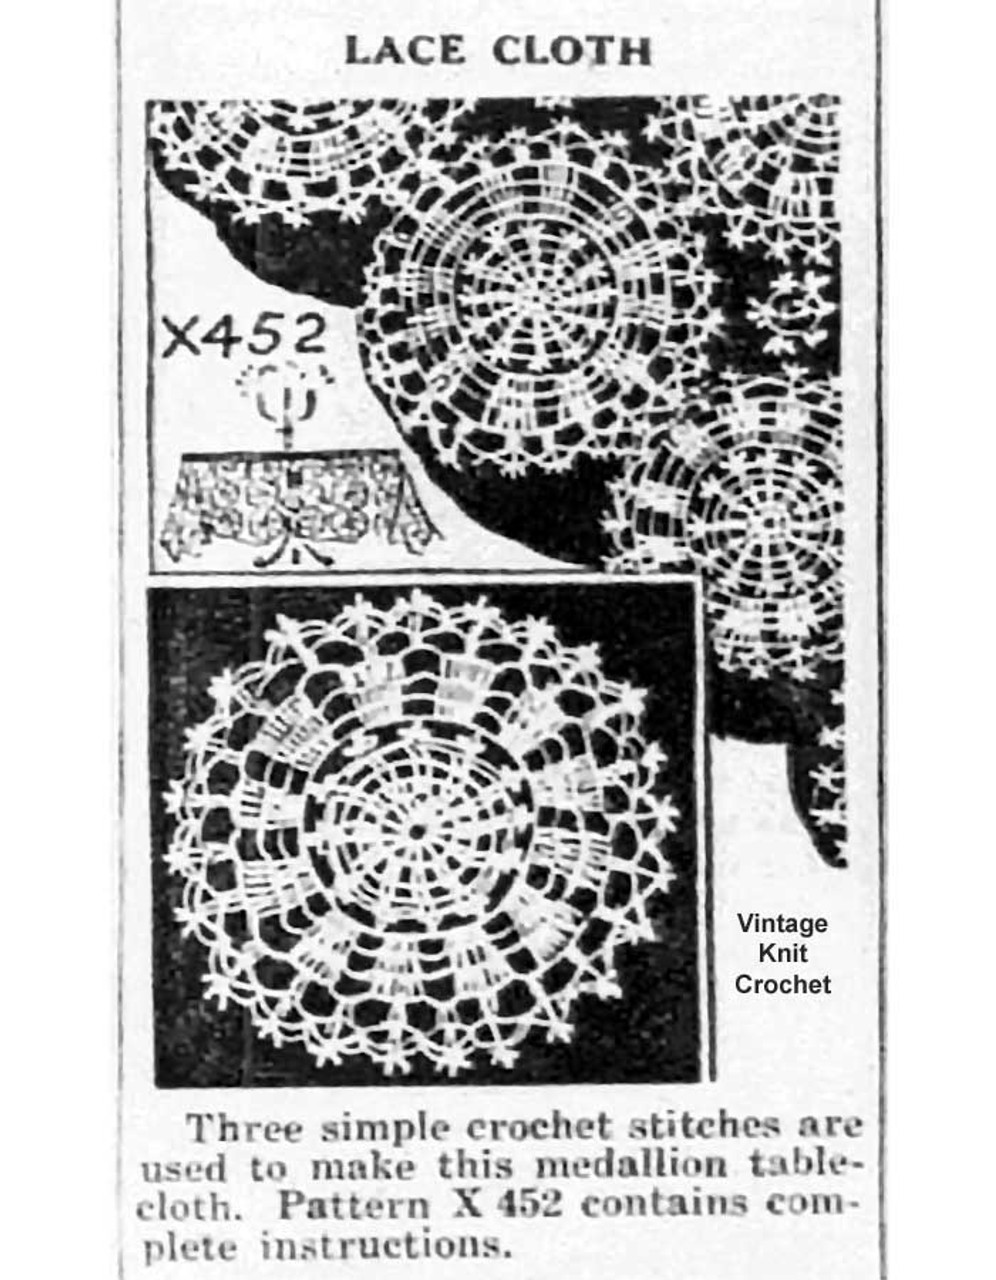 Needlework Bureau X-452 Medallion Crochet Pattern Newspaper Advertisement